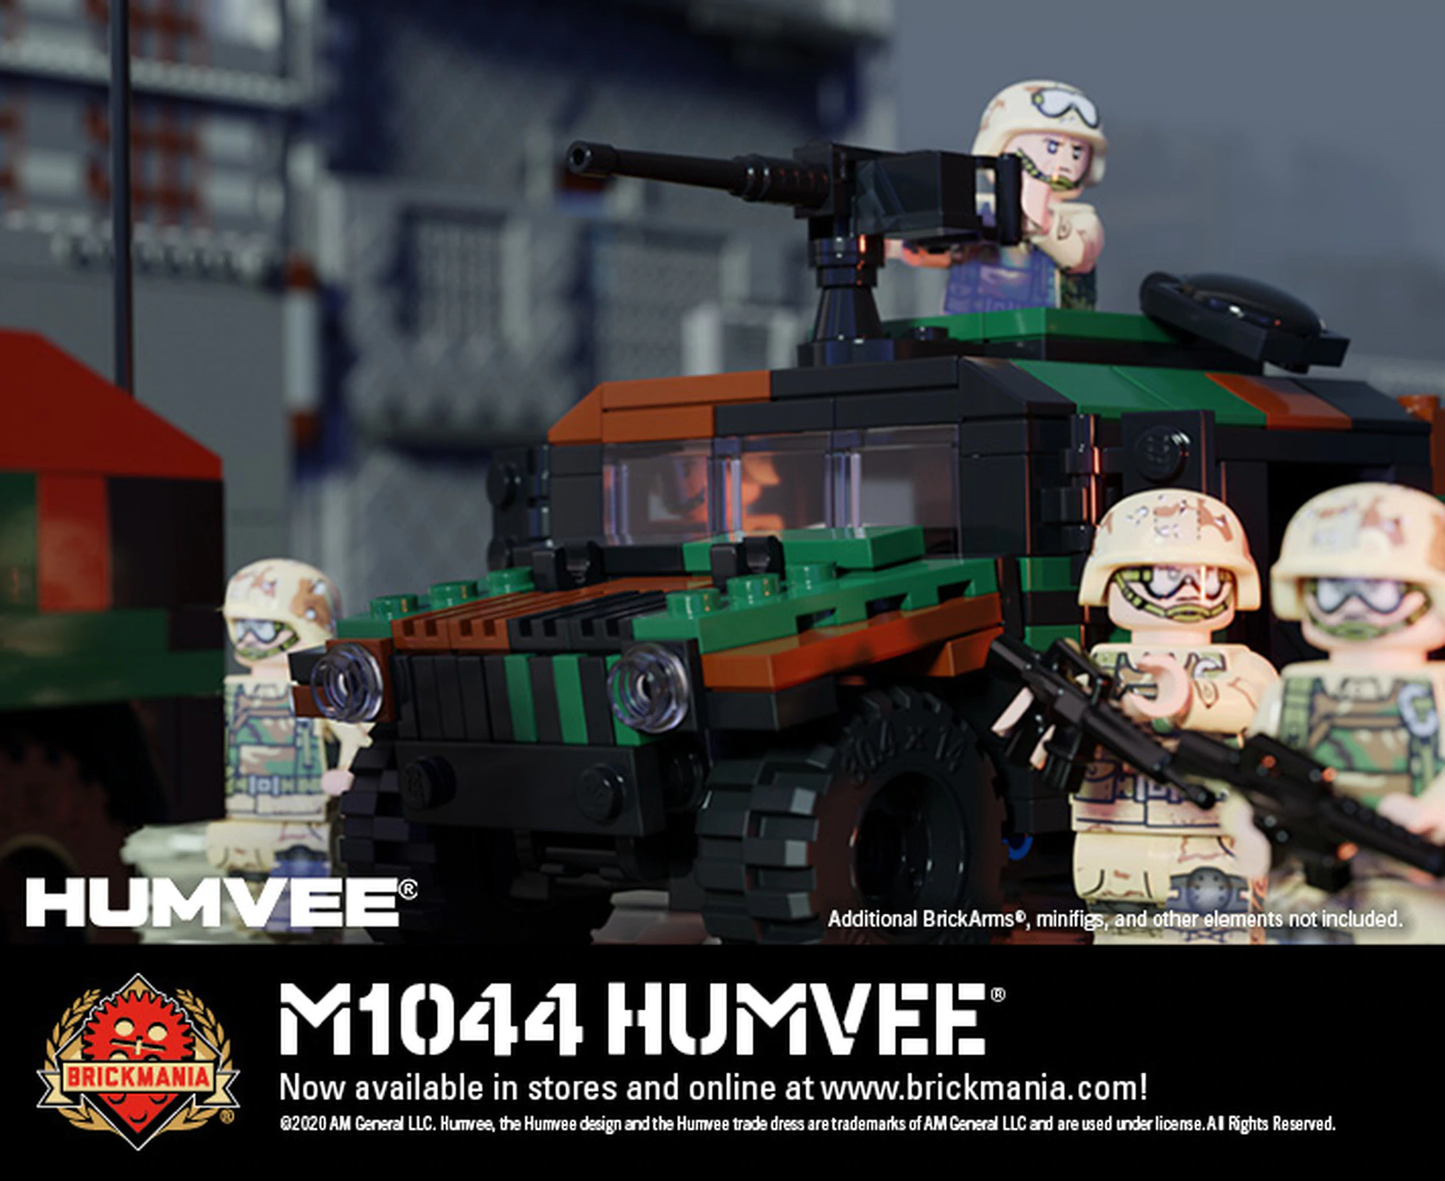 M1044 HUMVEE® - Task Force Ranger Edition - MOMCOM inc.